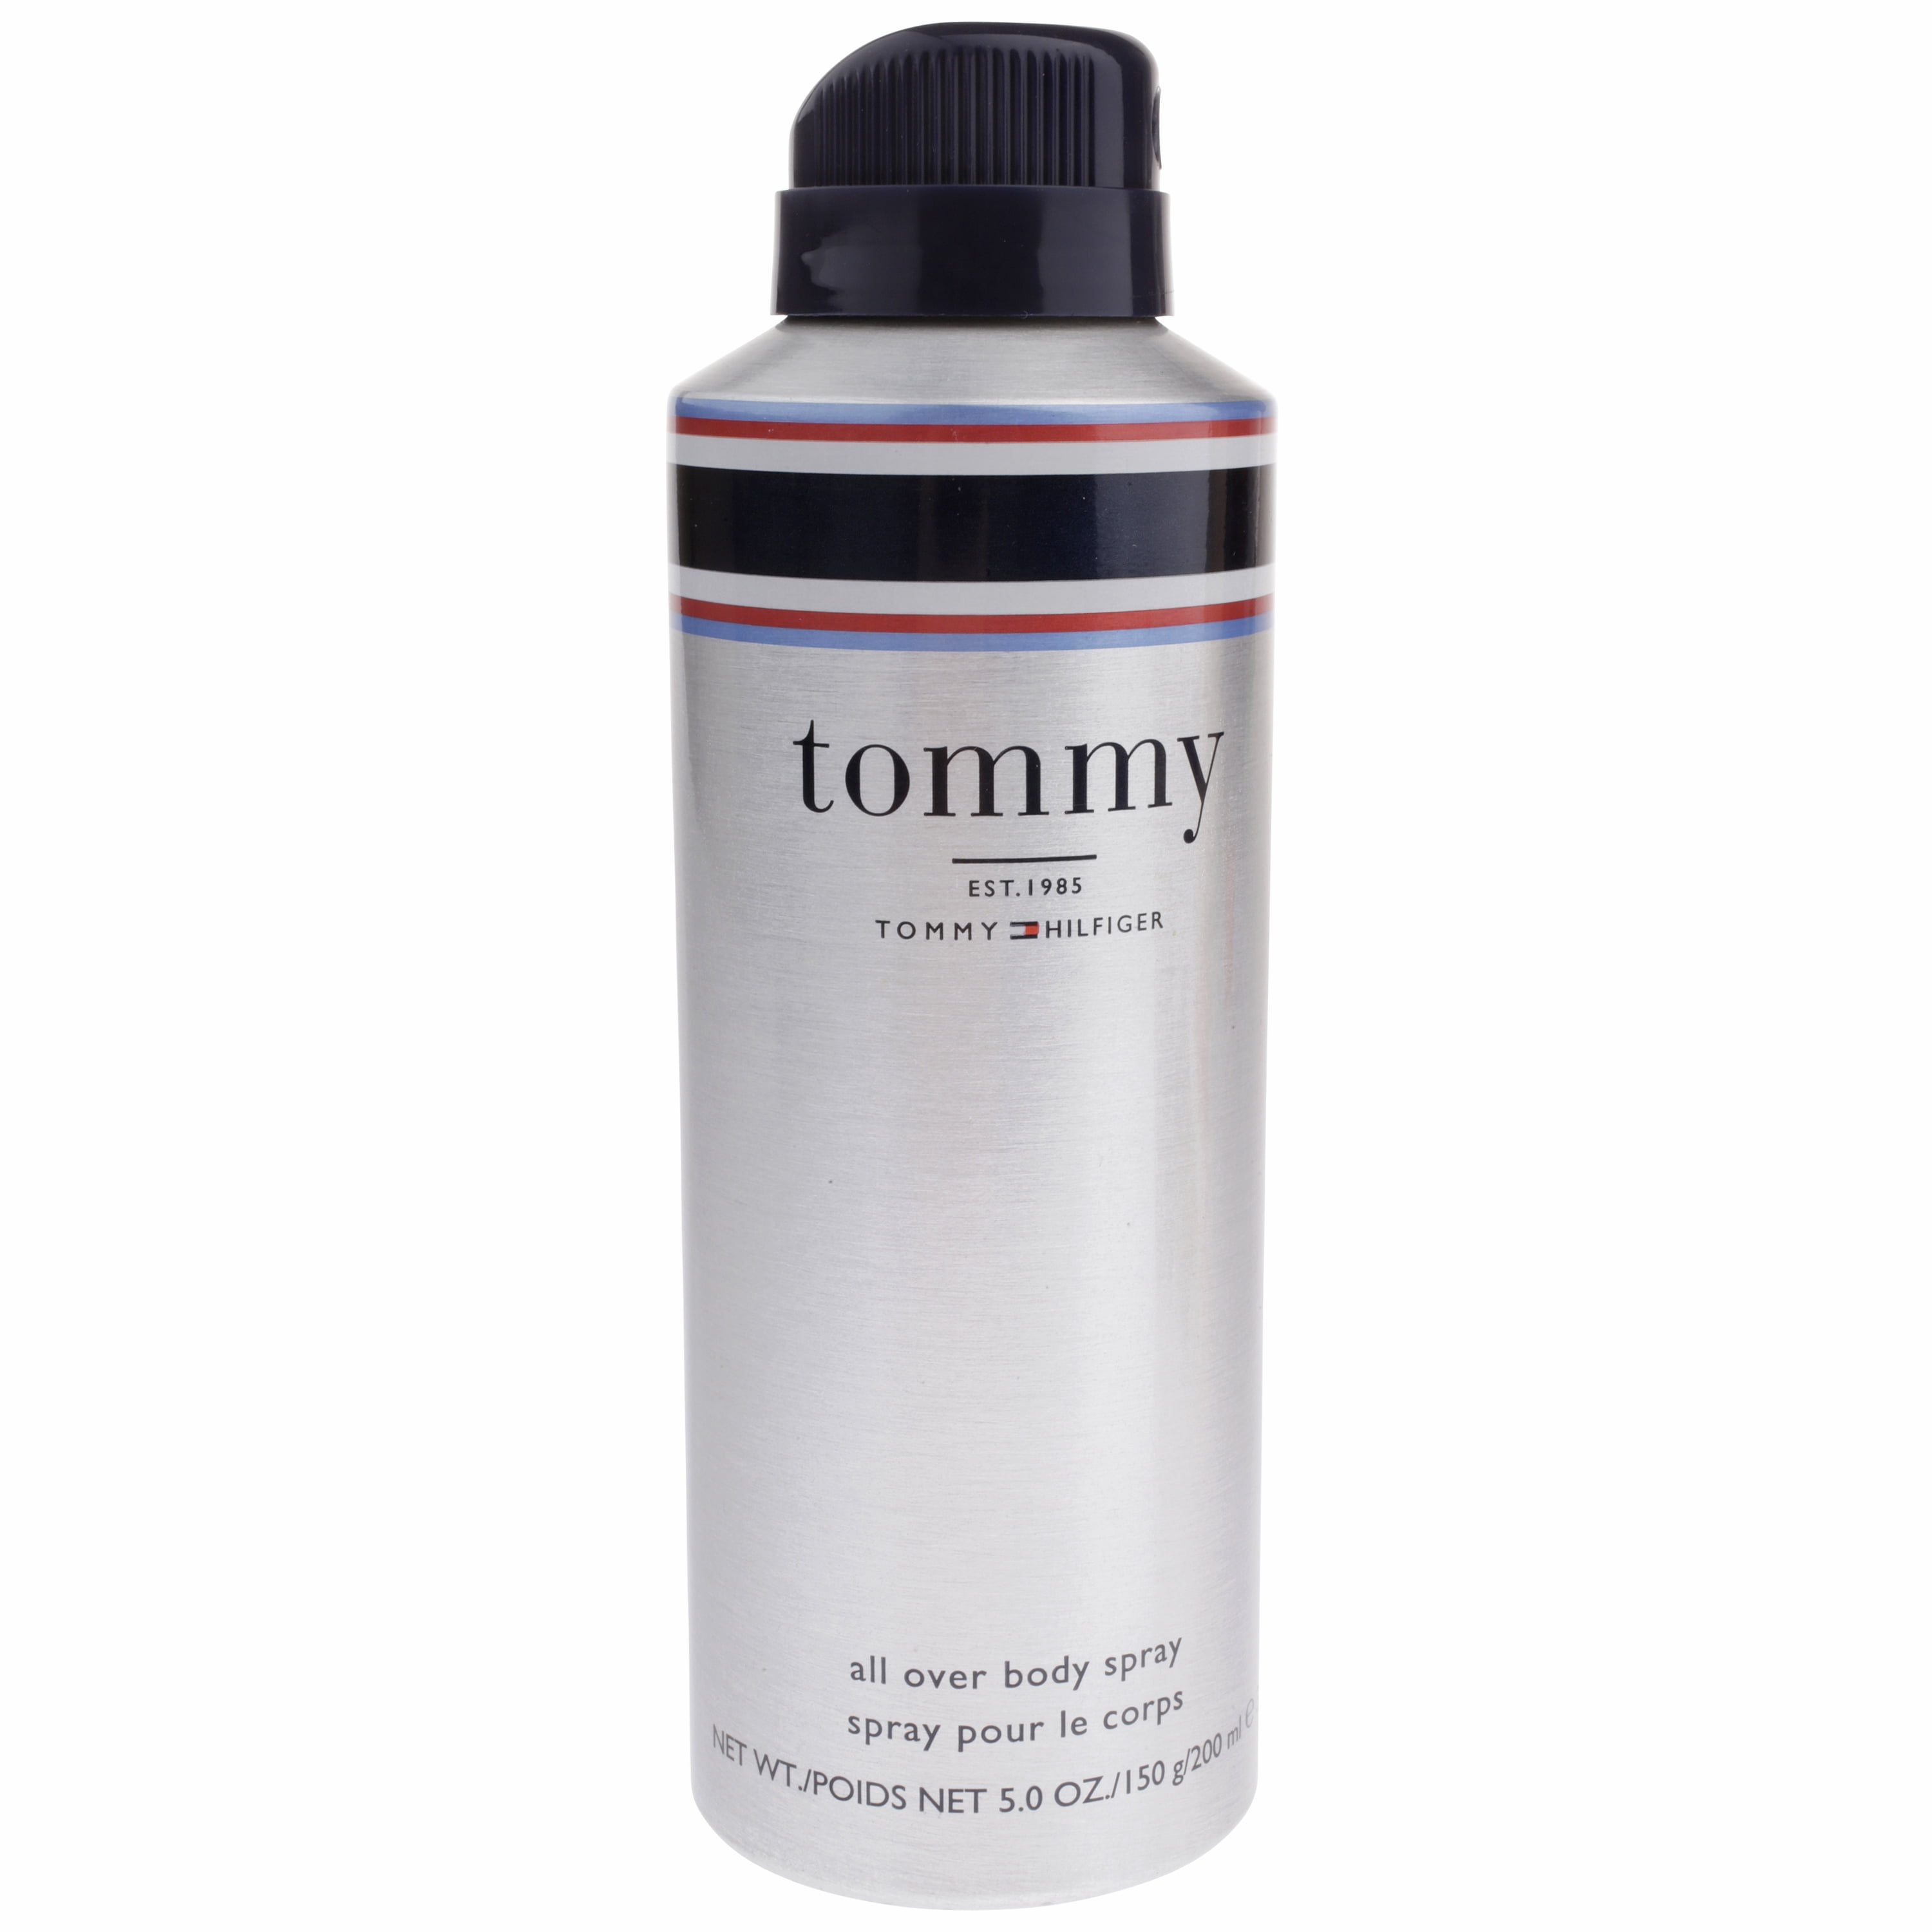 tommy girl deodorant spray